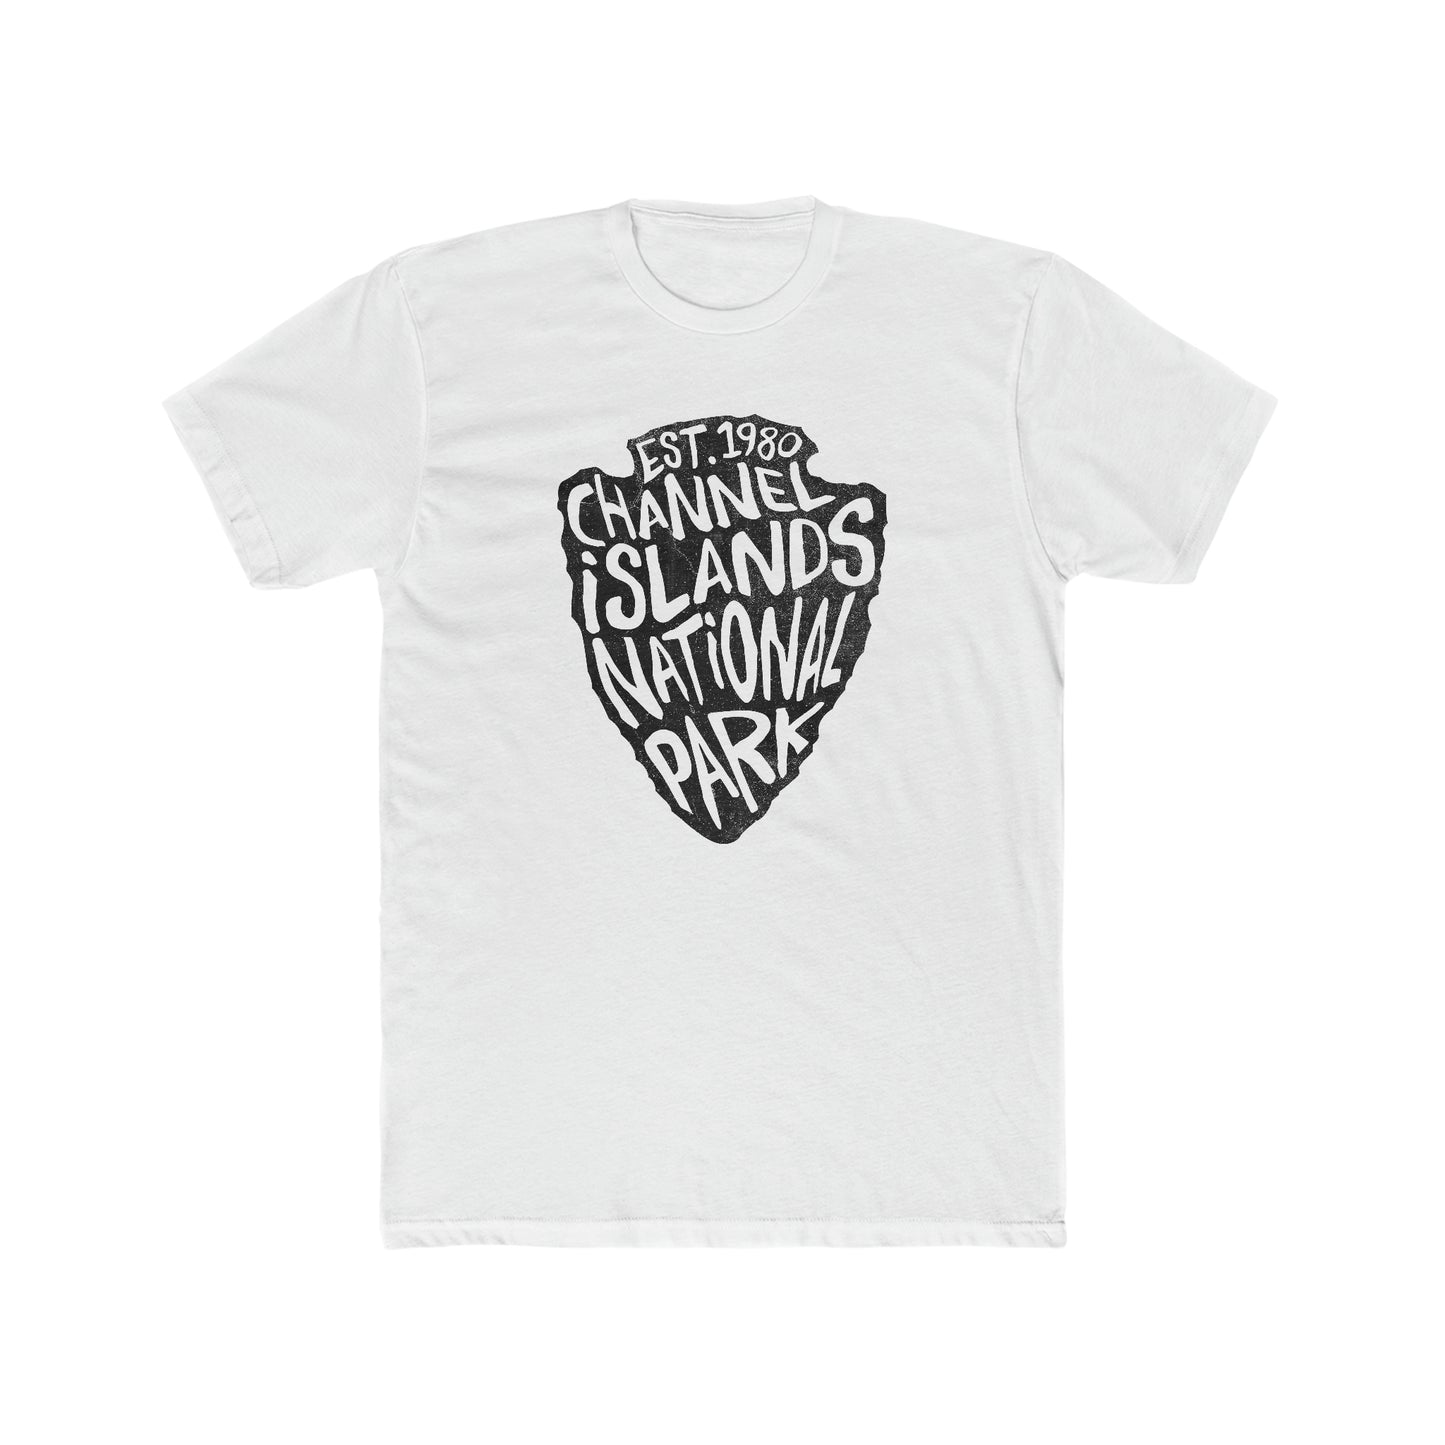 Channel Islands National Park T-Shirt - Arrowhead Design